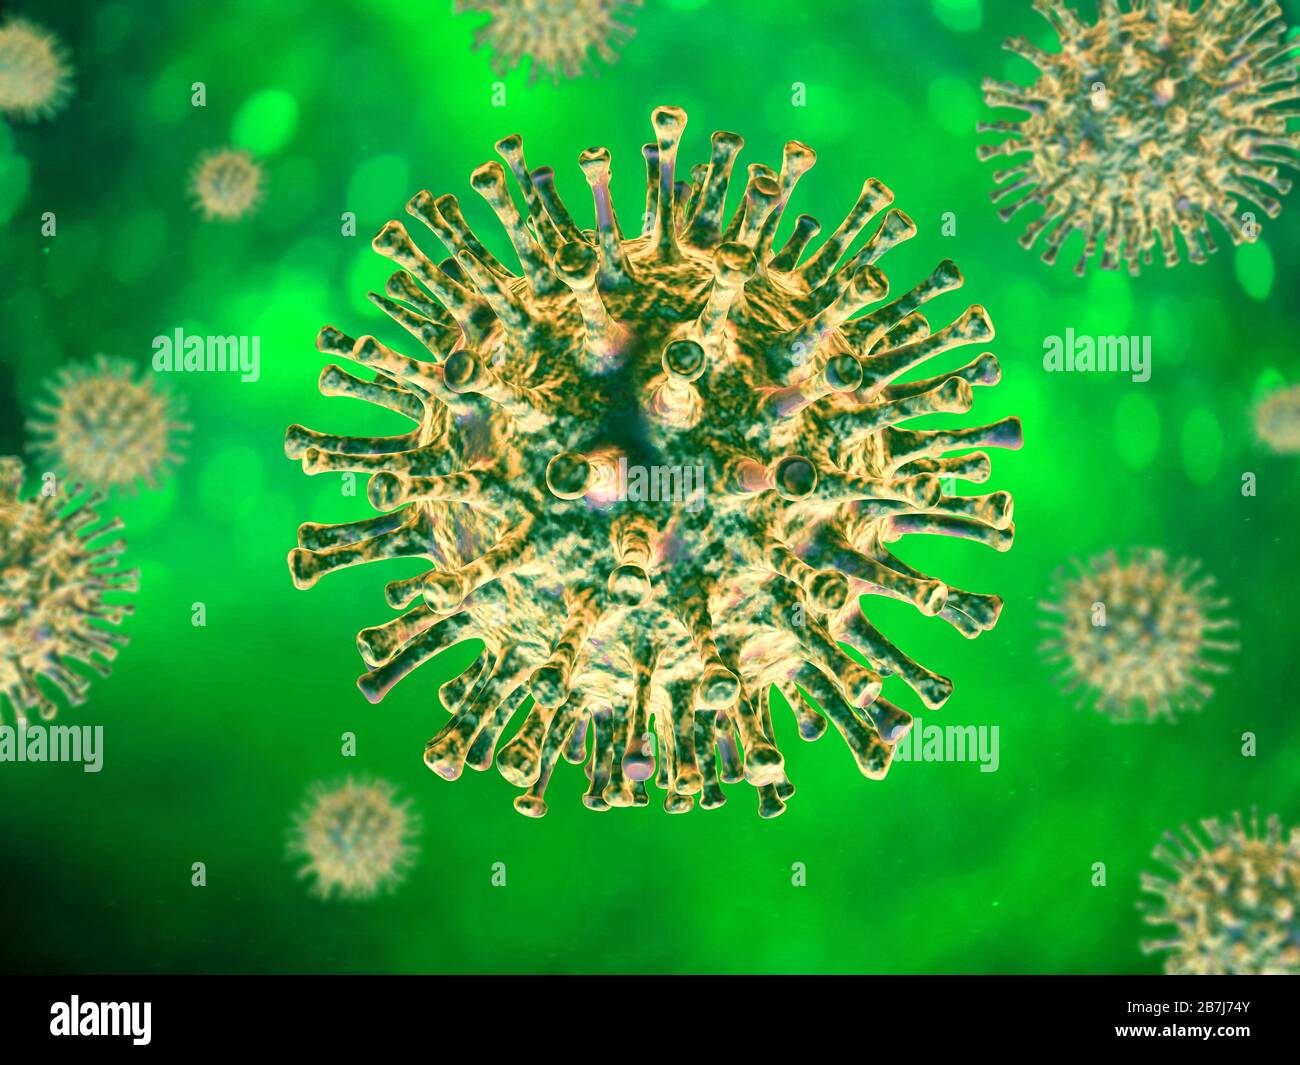 Corona-Virenszene. Grün/gelbe Motive auf grünem Hintergrund. Stockfoto